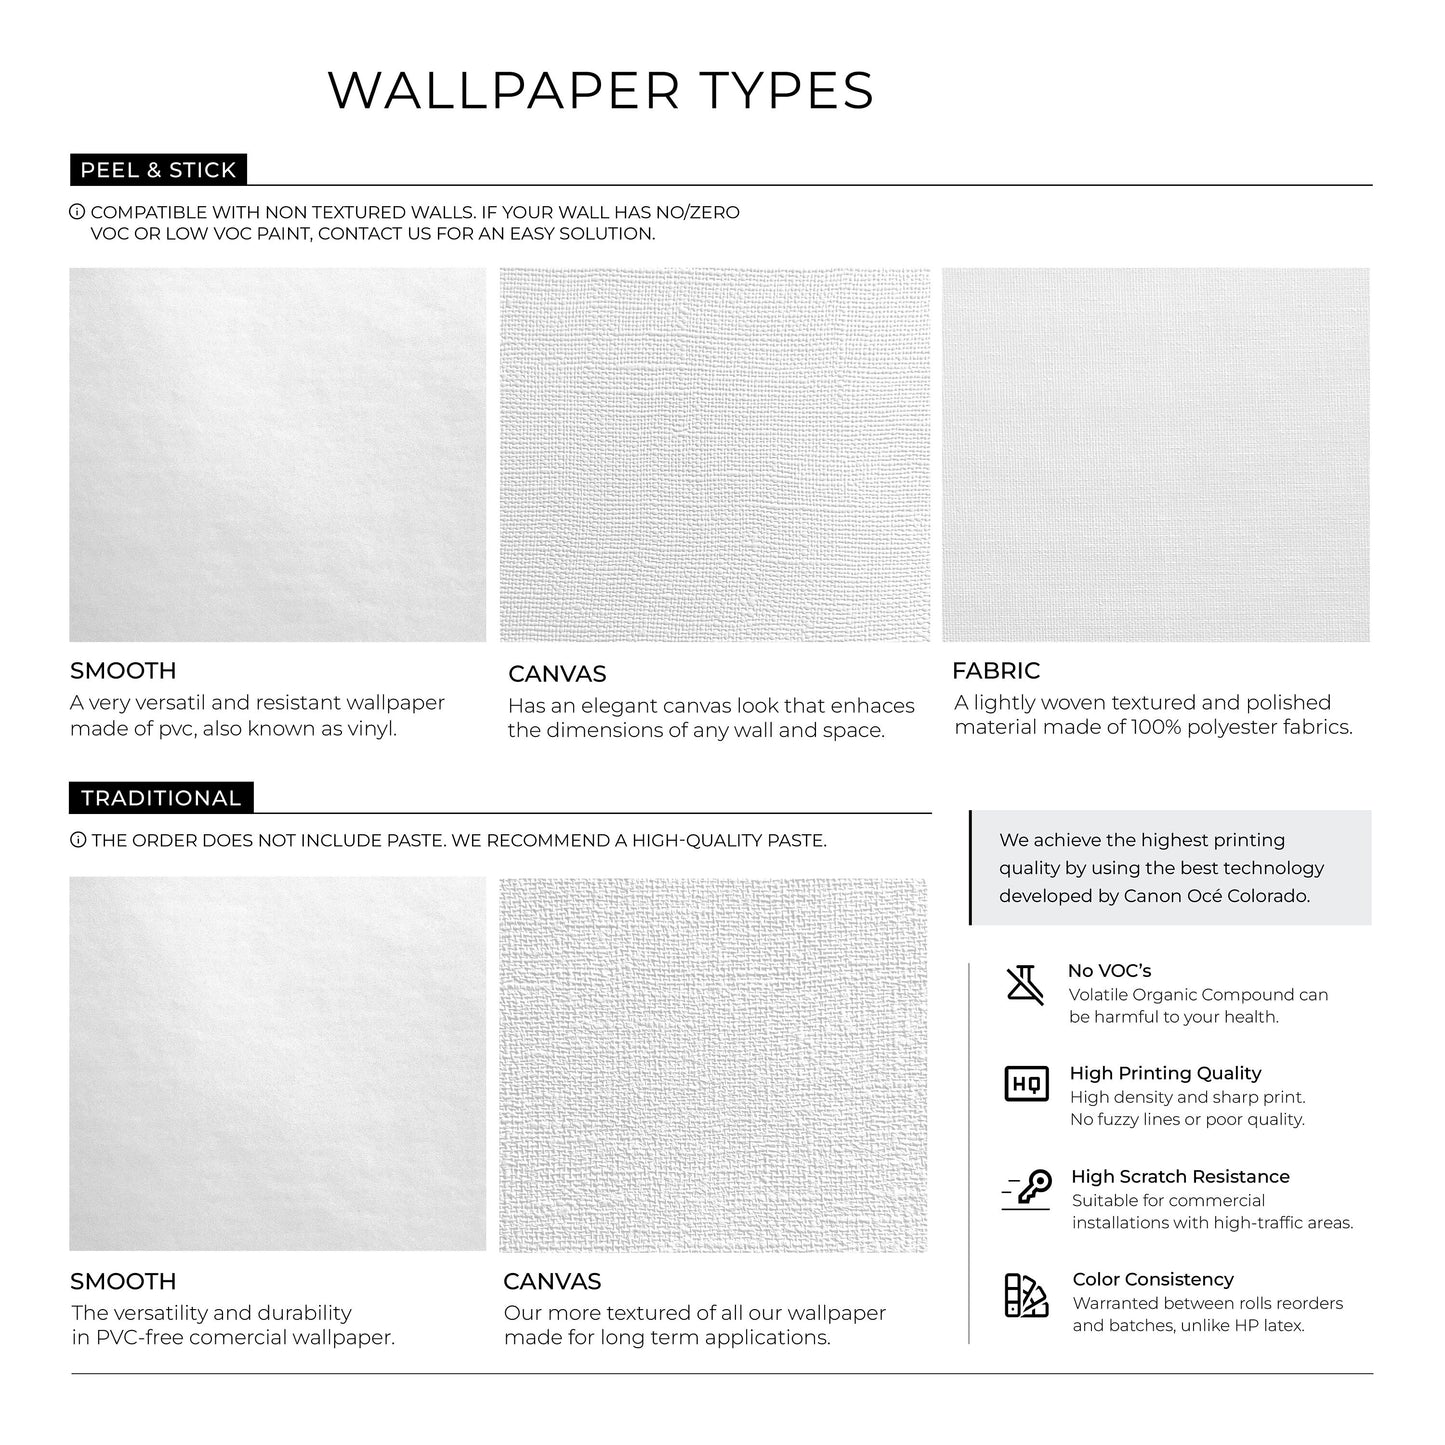 Removable Wallpaper, Temporary Wallpaper, Minimalistic Wallpaper, Peel and Stick Wallpaper, Wall Paper, Boho - B028